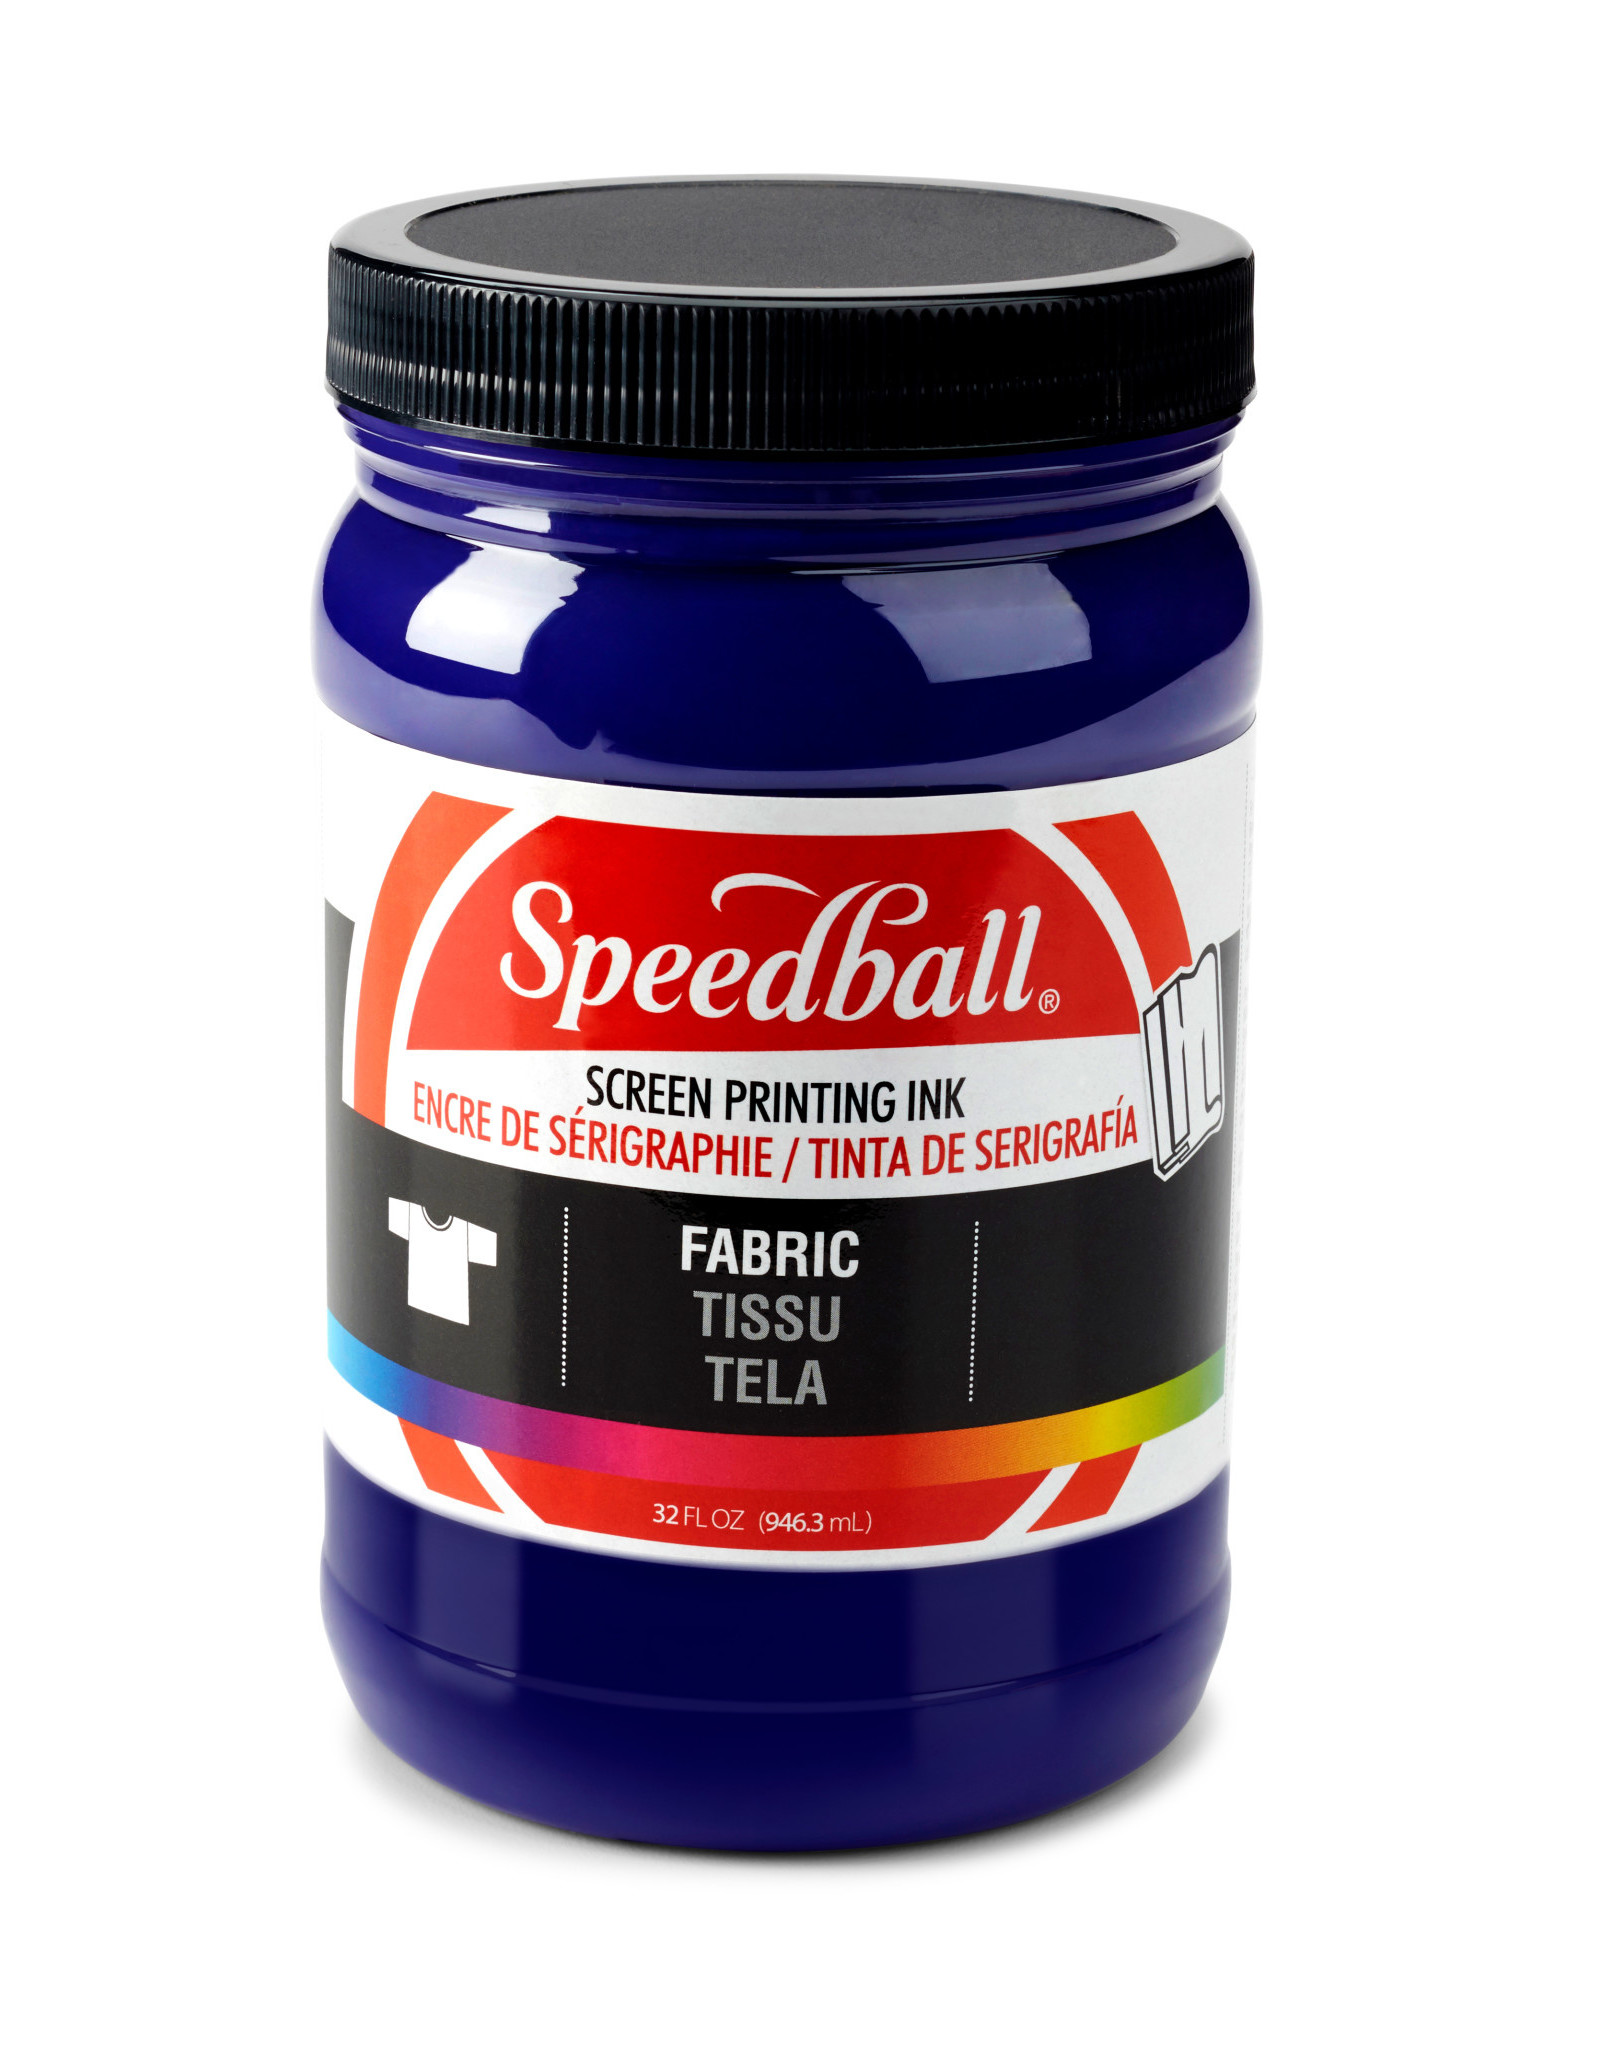 SPEEDBALL ART PRODUCTS Speedball Fabric Screen Printing Ink, Violet, 32oz